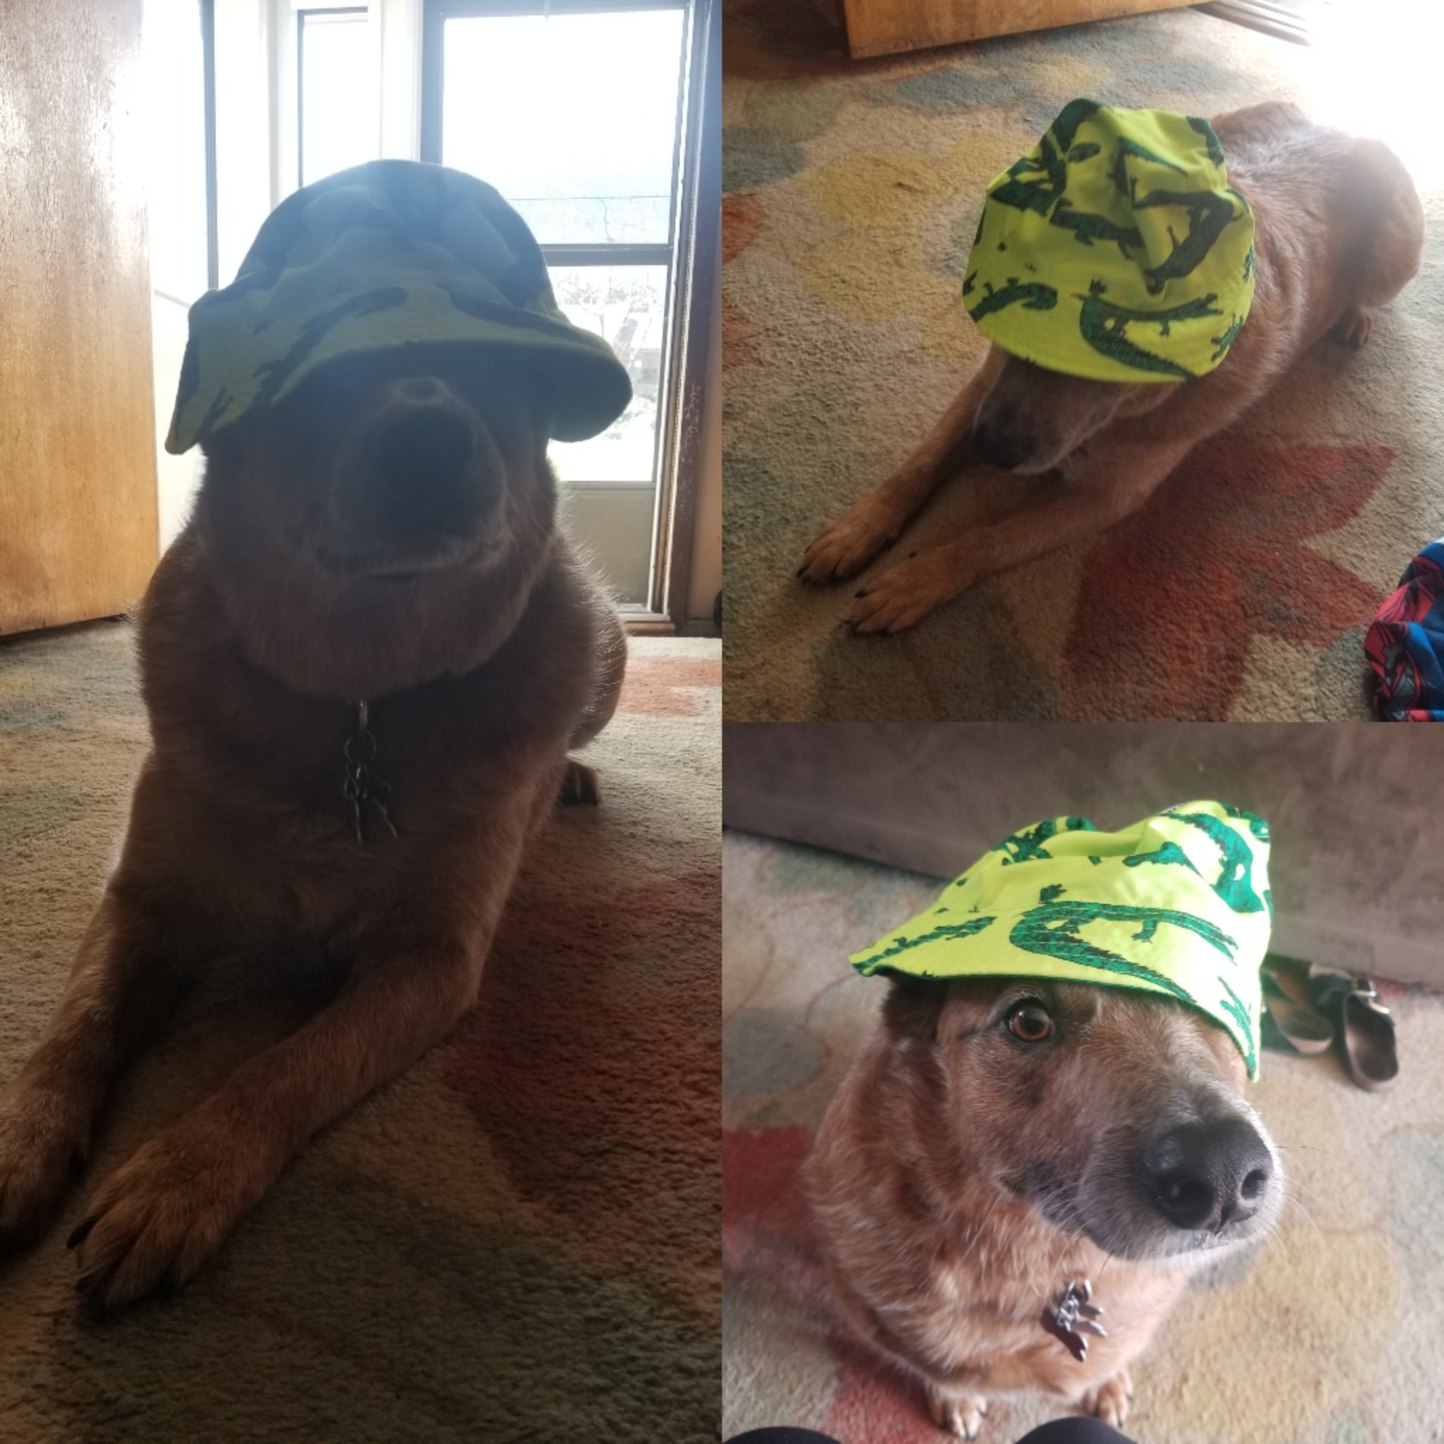 He likes his alligator hat - meme